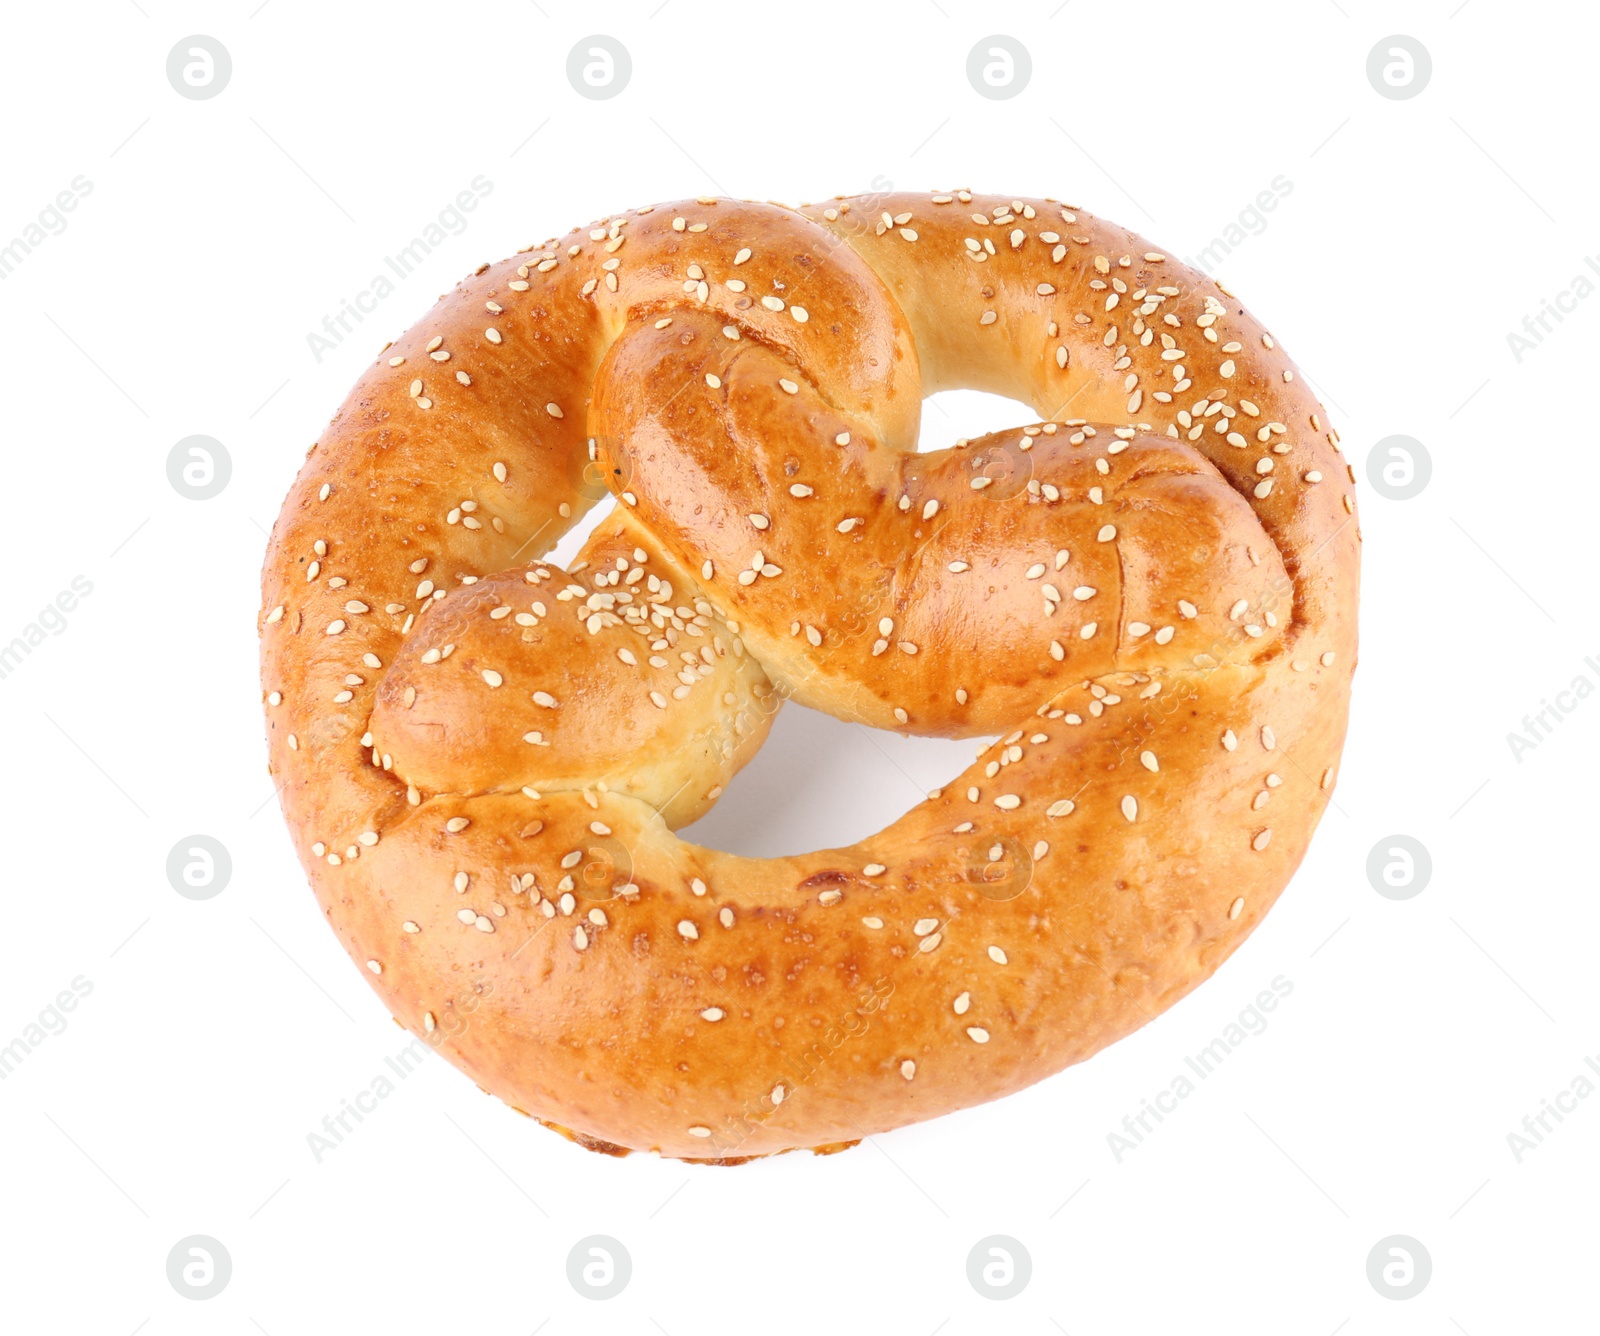 Photo of Tasty freshly baked pretzel isolated on white